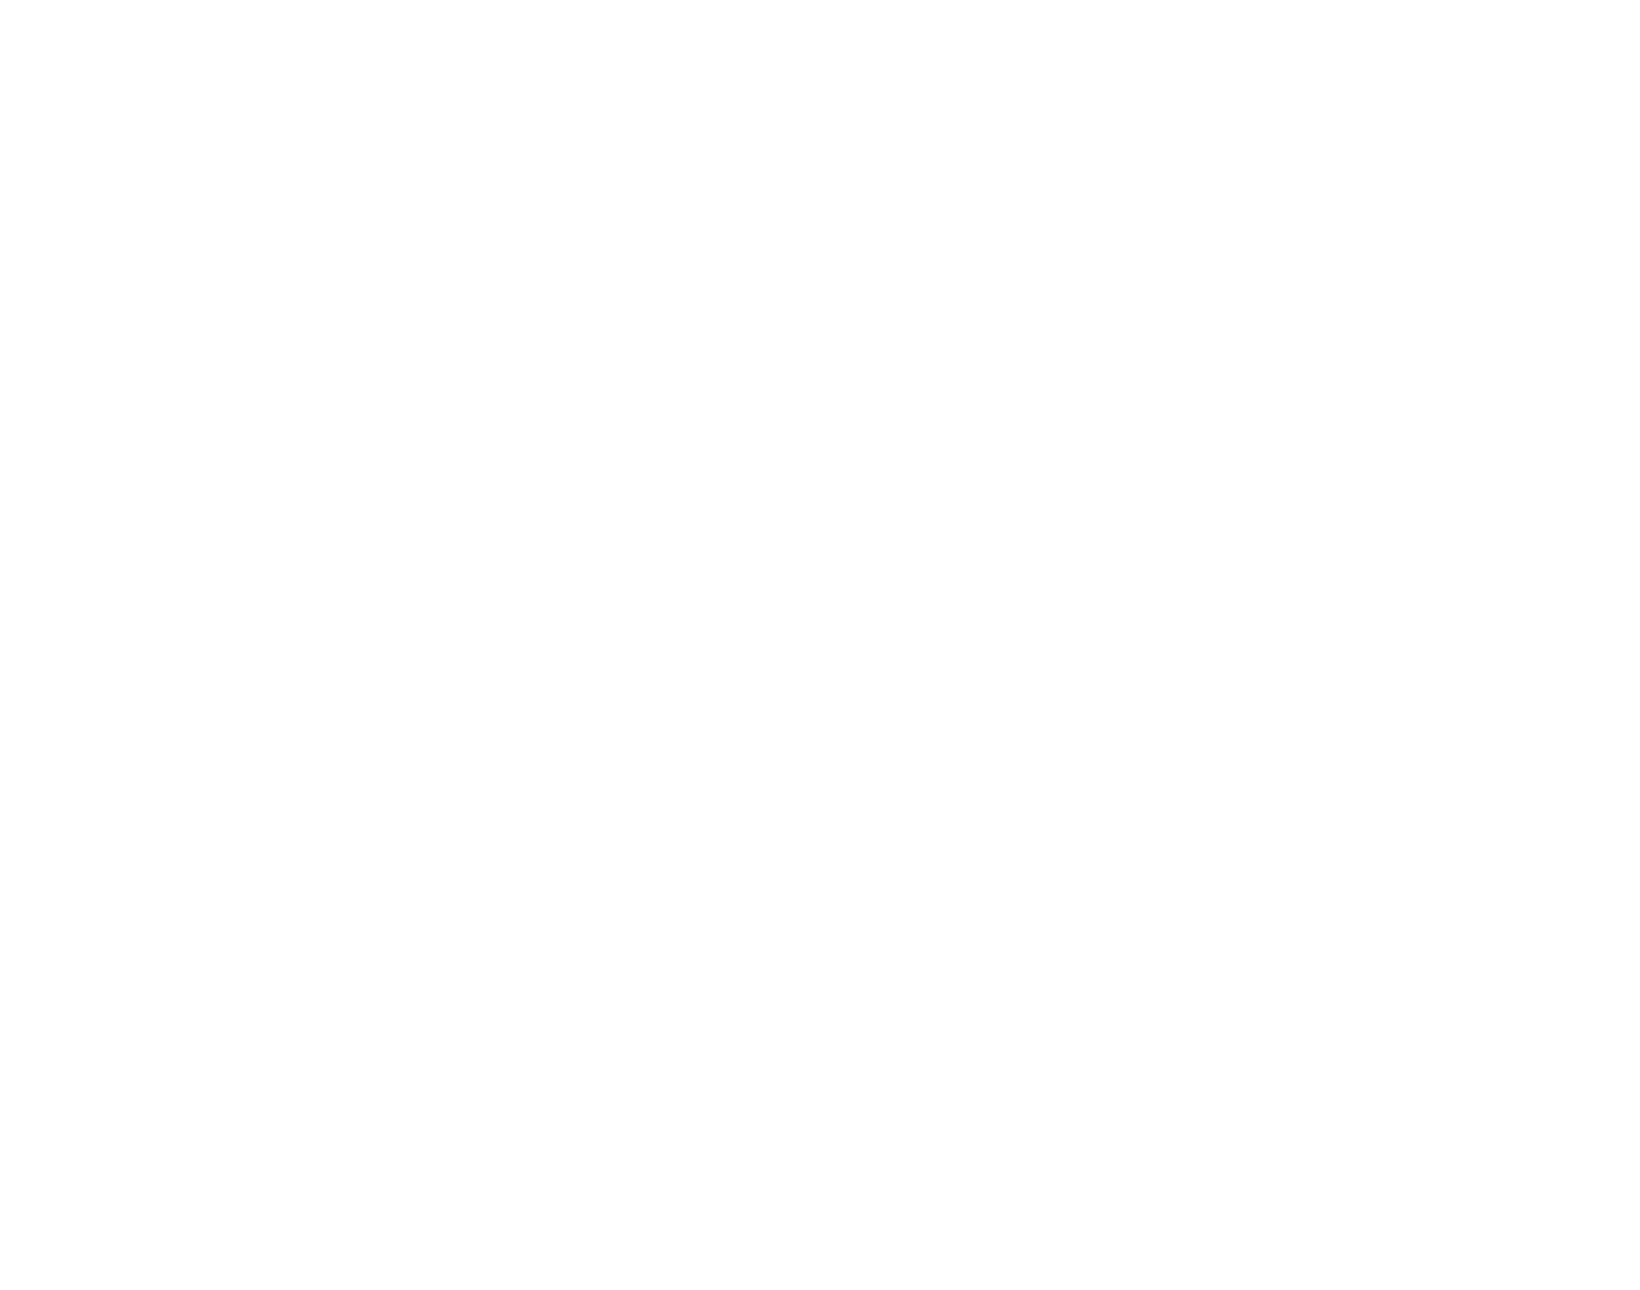 Sound Affects 